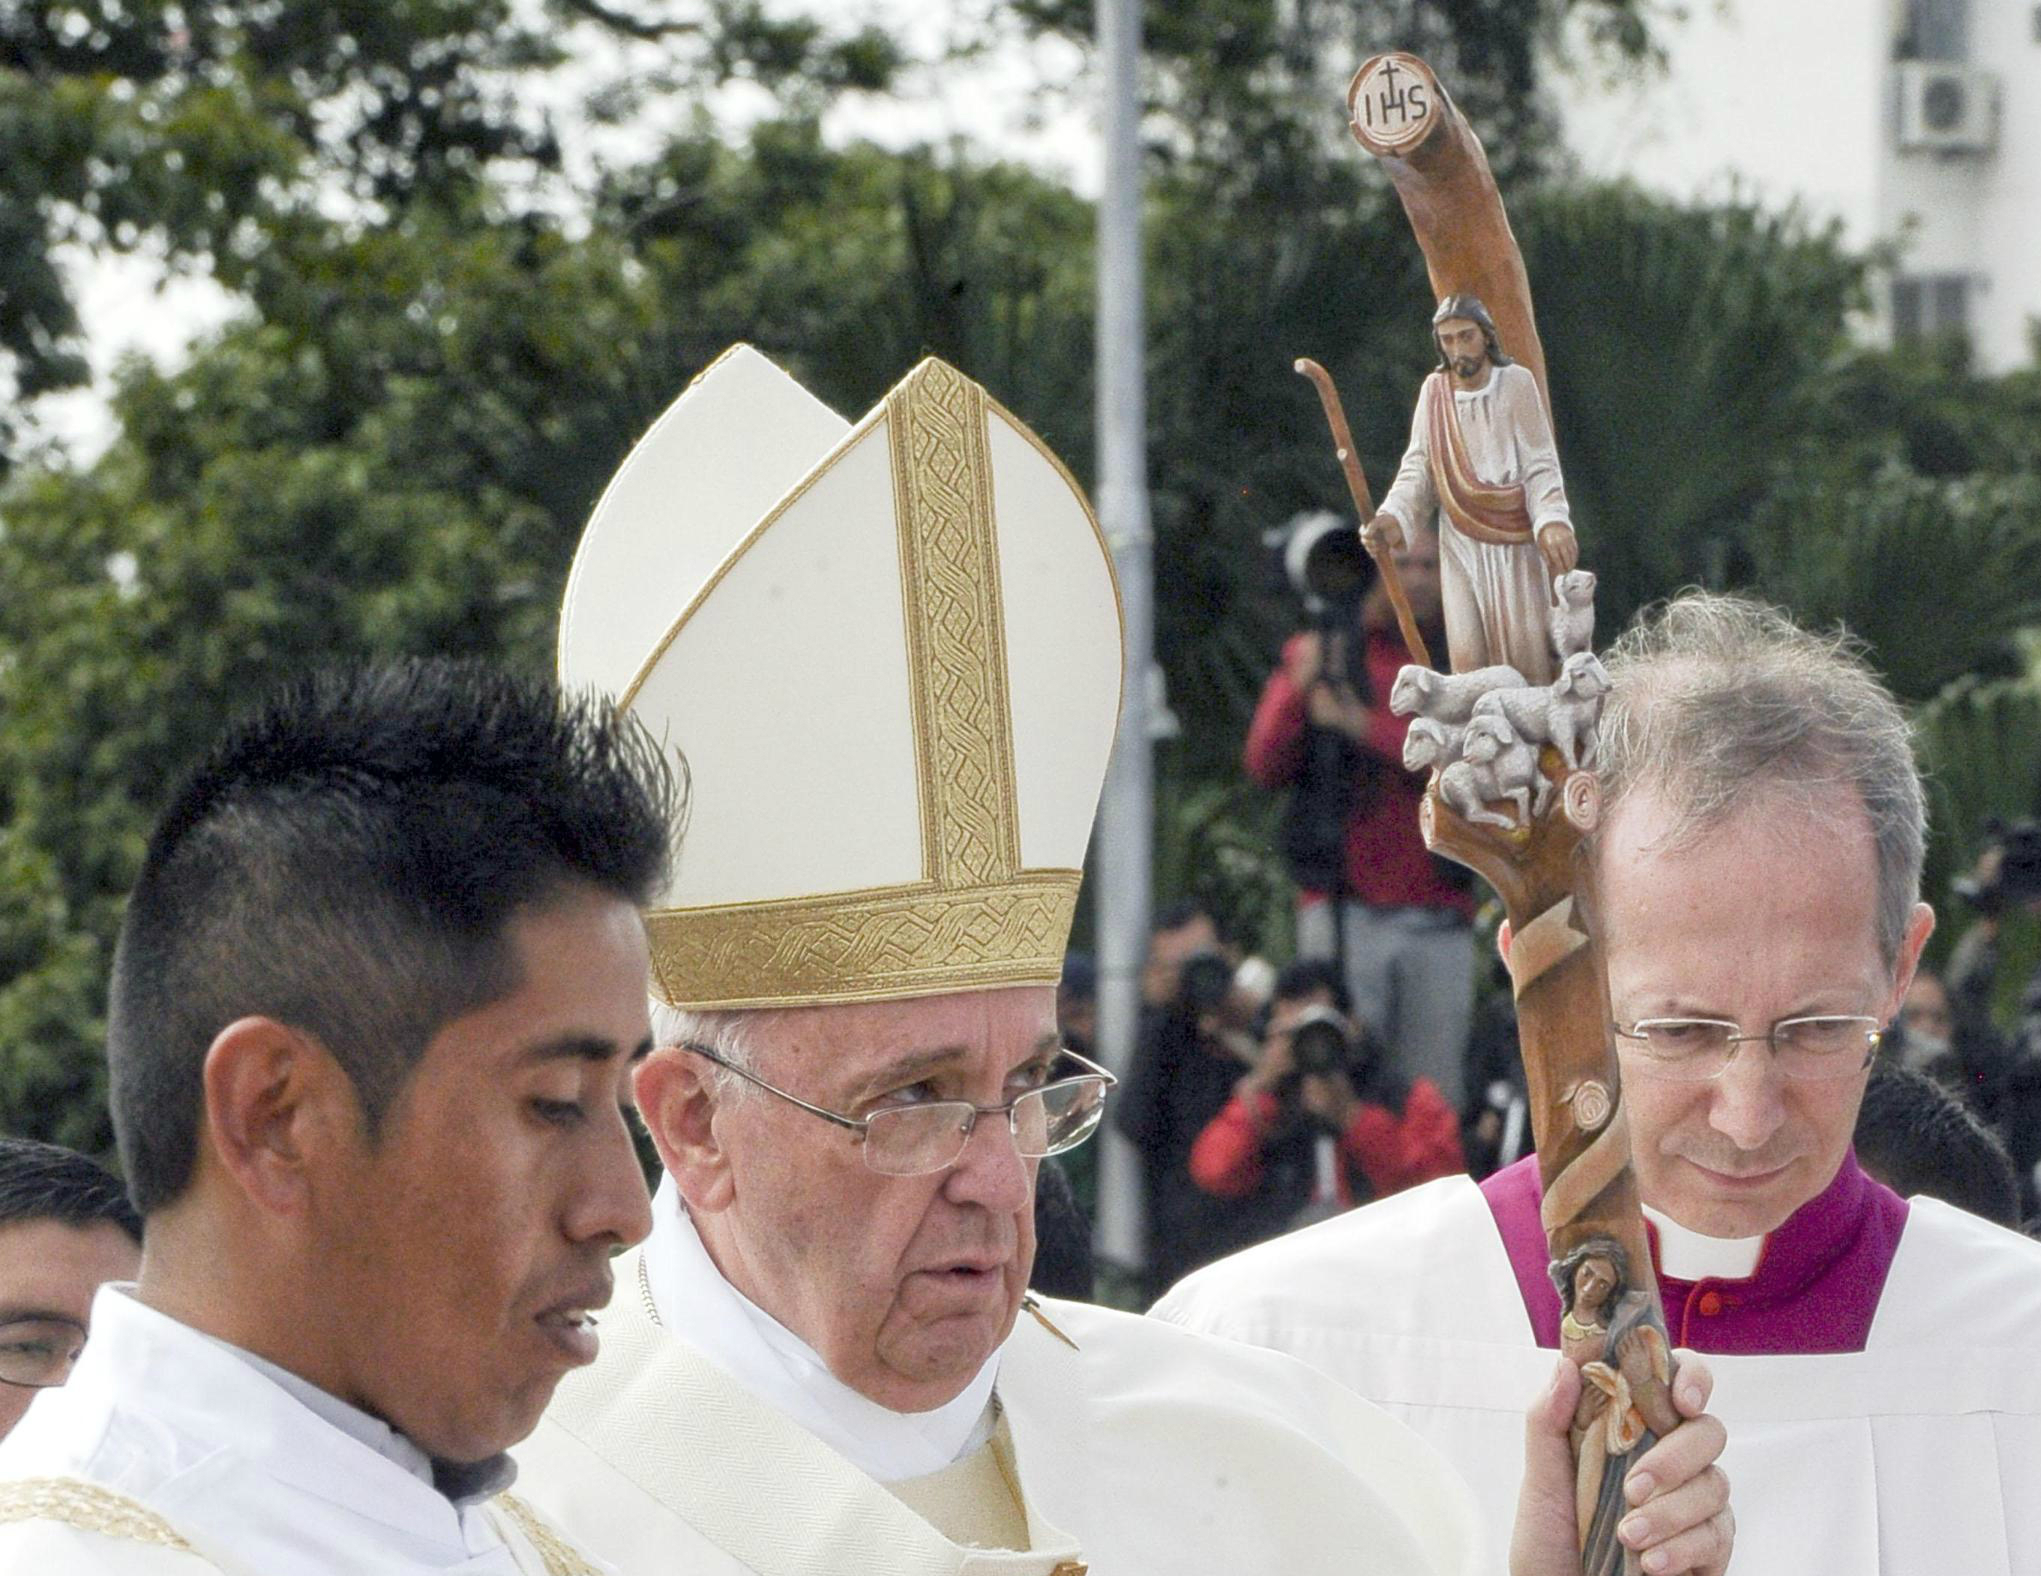 Pope Francis with new crozier celebrates Mass in Santa Cruz de la Sierra